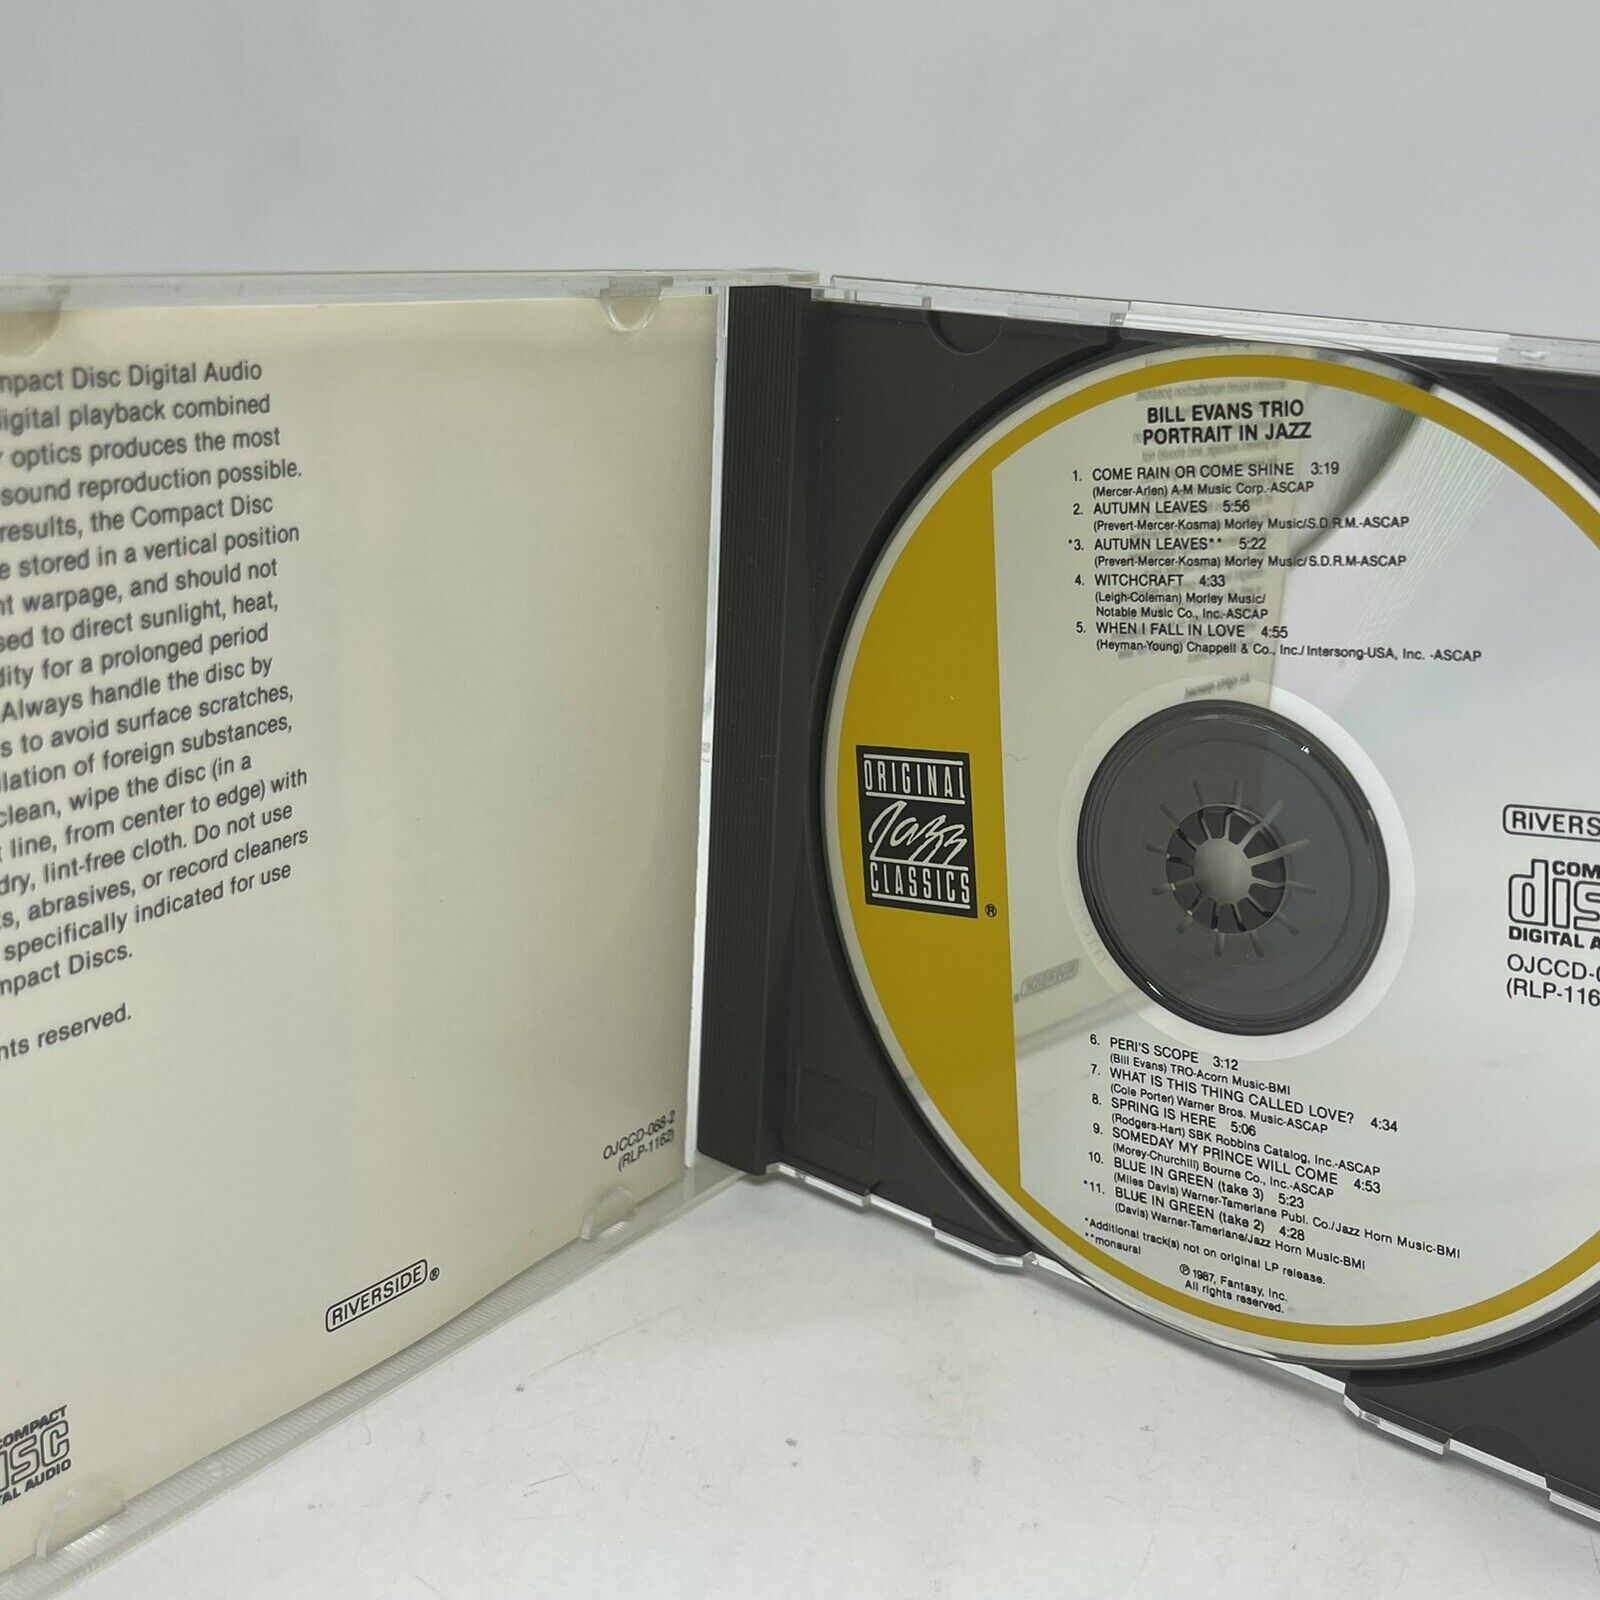 BILL EVANS TRIO - Portrait In Jazz - CD 1987 - 25218008822 | eBay